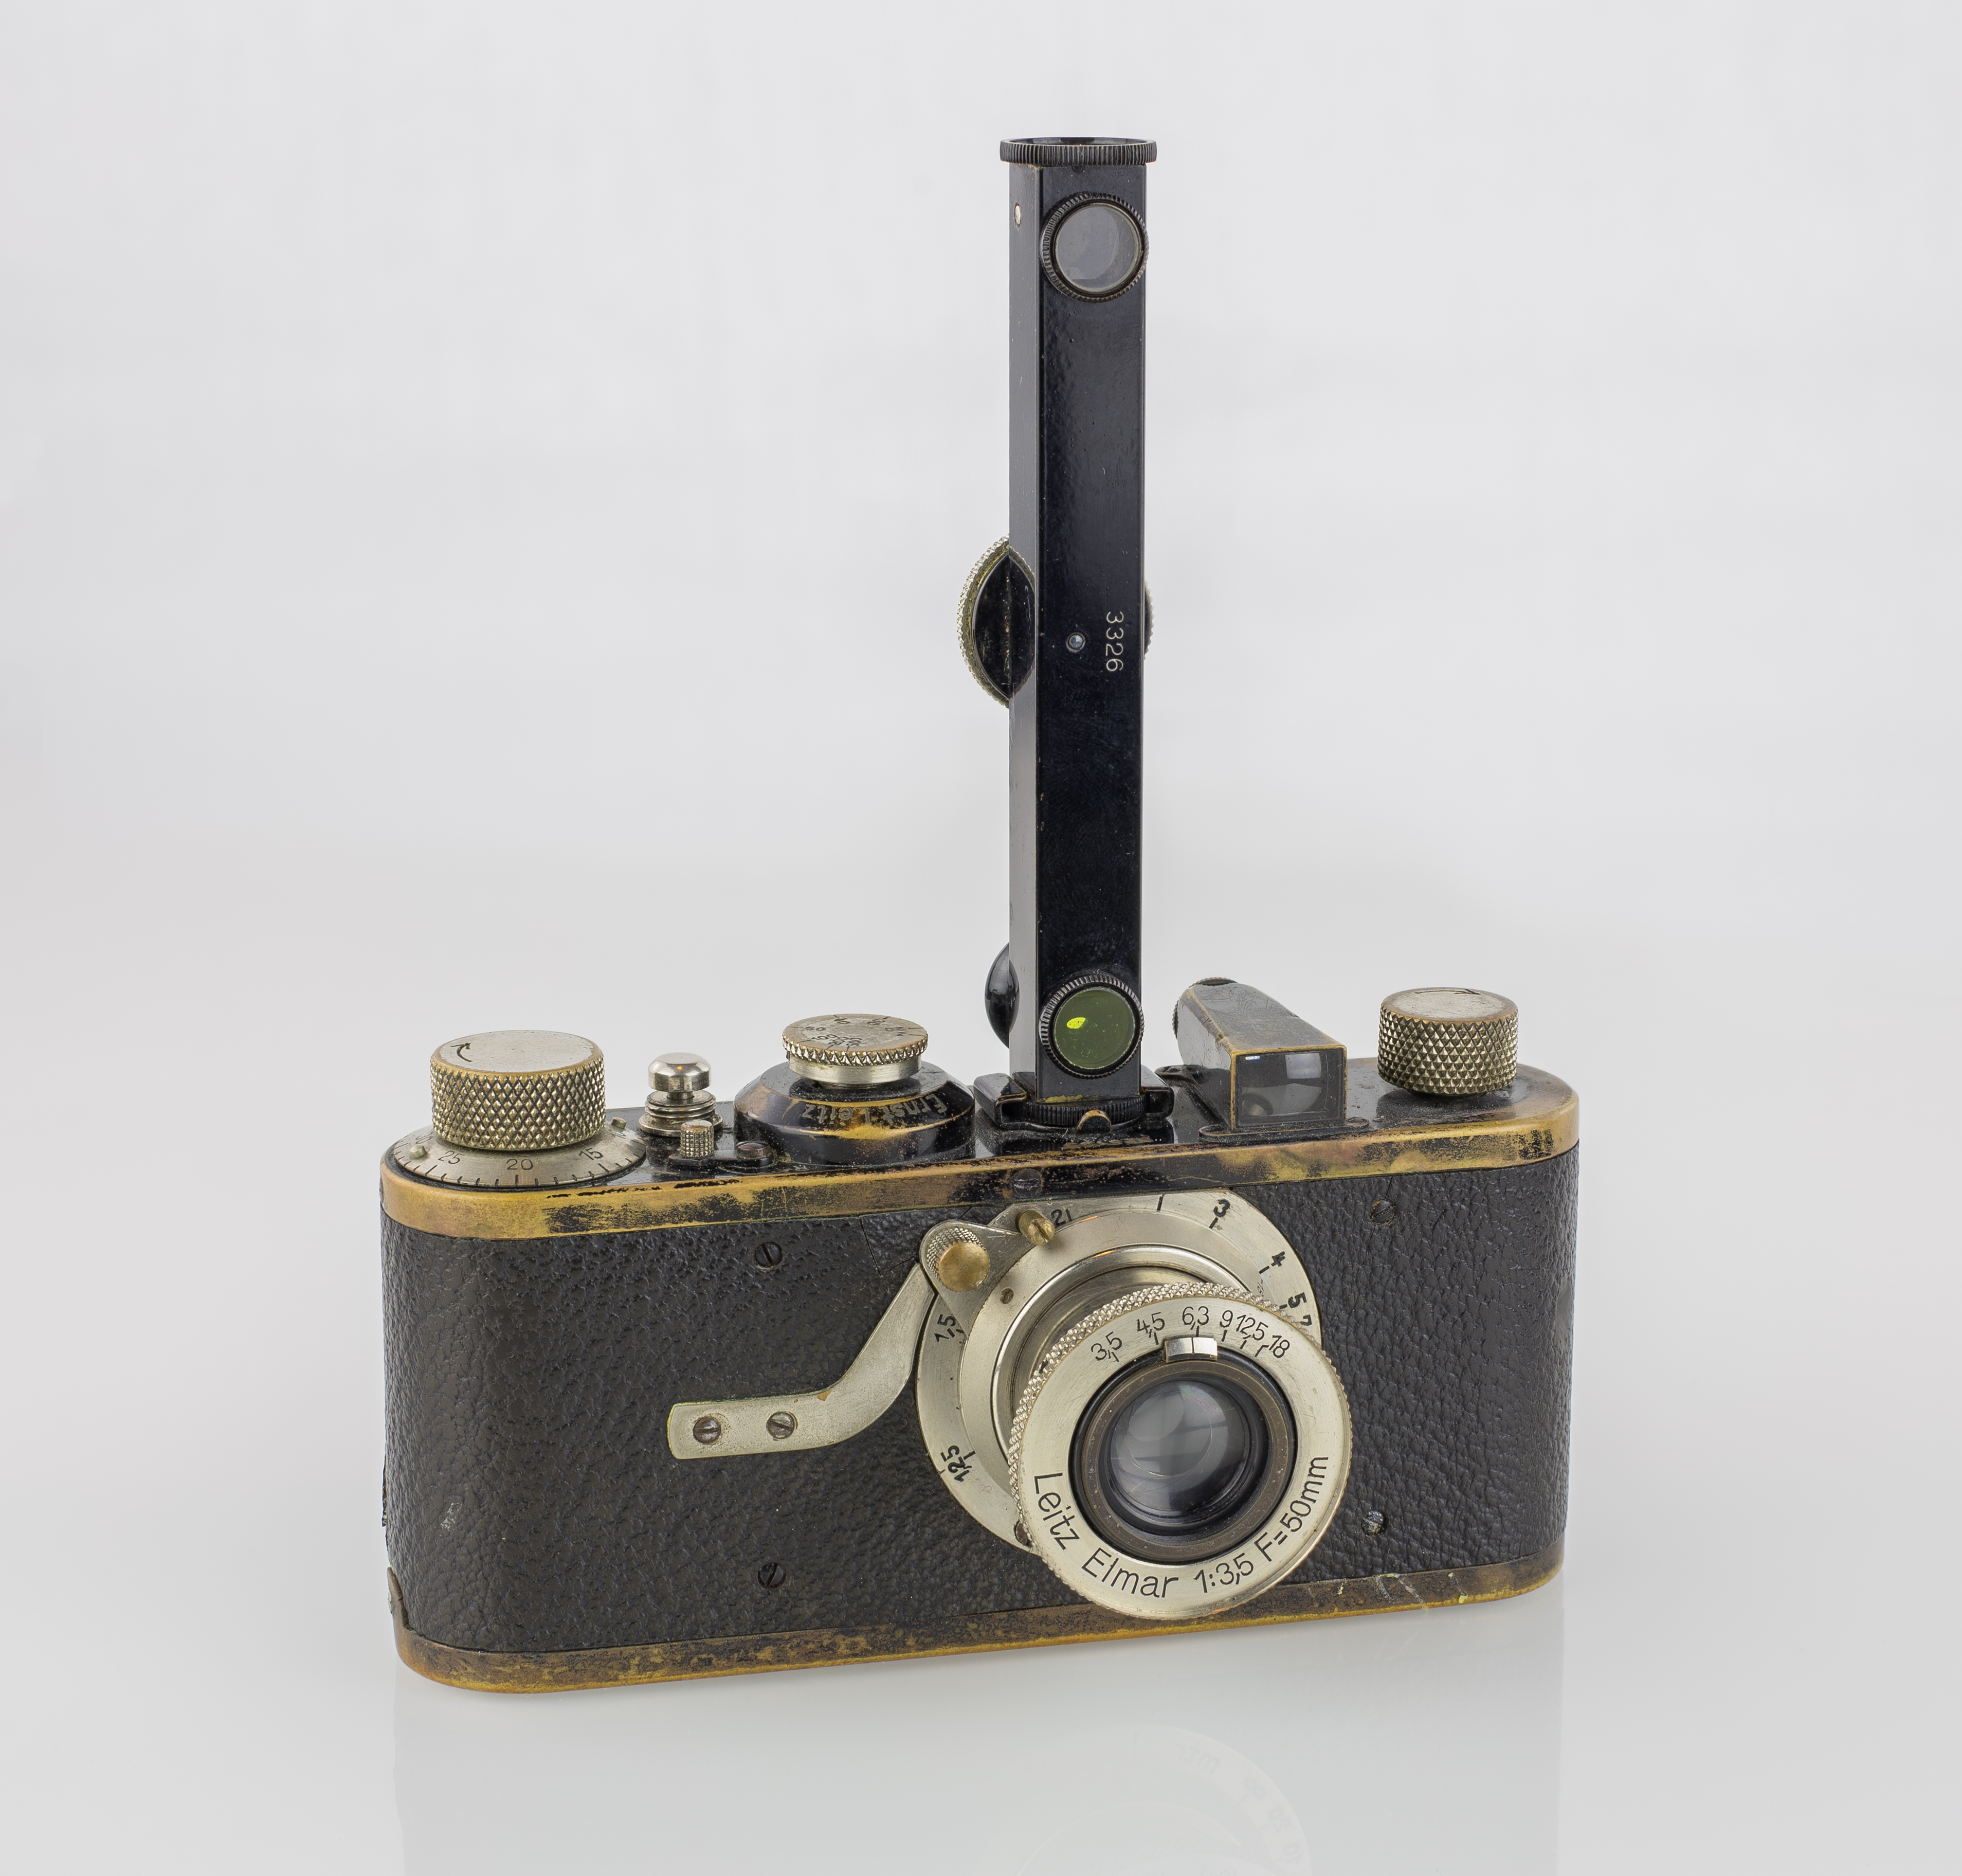 LEI0060 186 Leica I Sn.5193 1927 mit Entfernungsmesser front view FS -5764-Bearbeitet